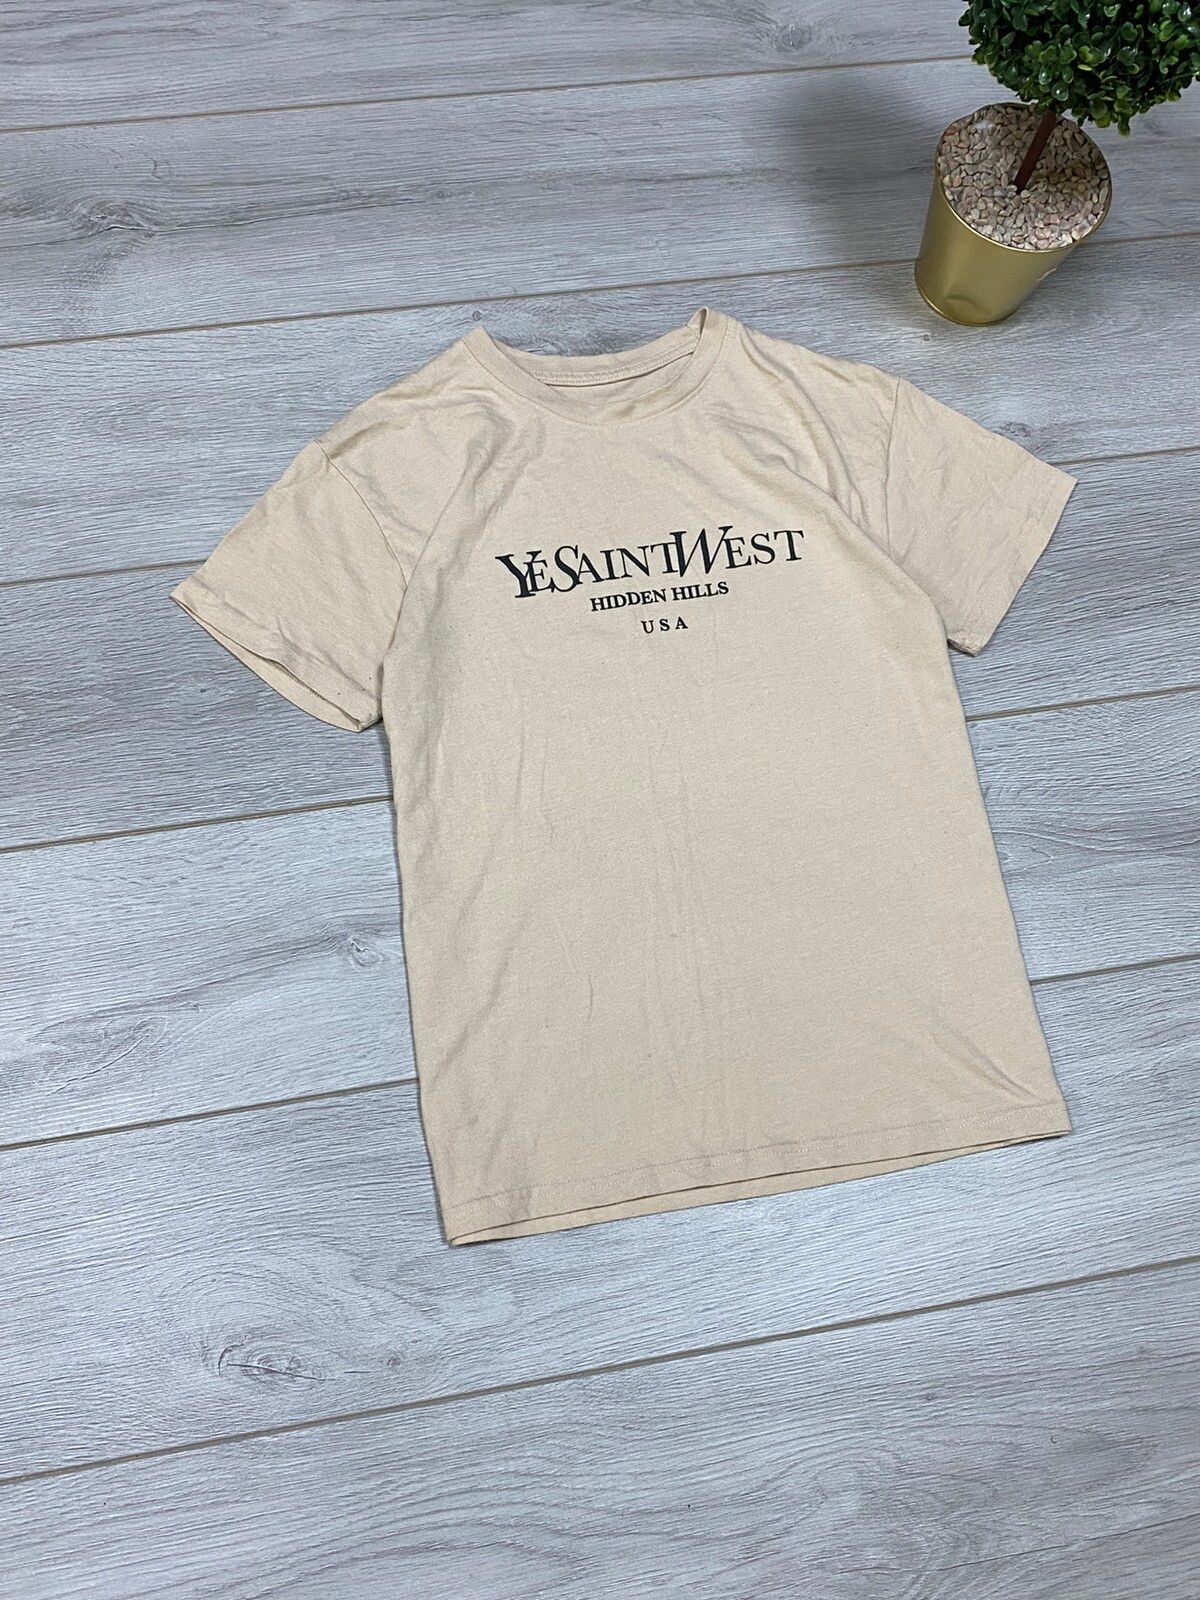 Vintage YeSaintWest Hidden Hills USA vintage t-shirt | Grailed